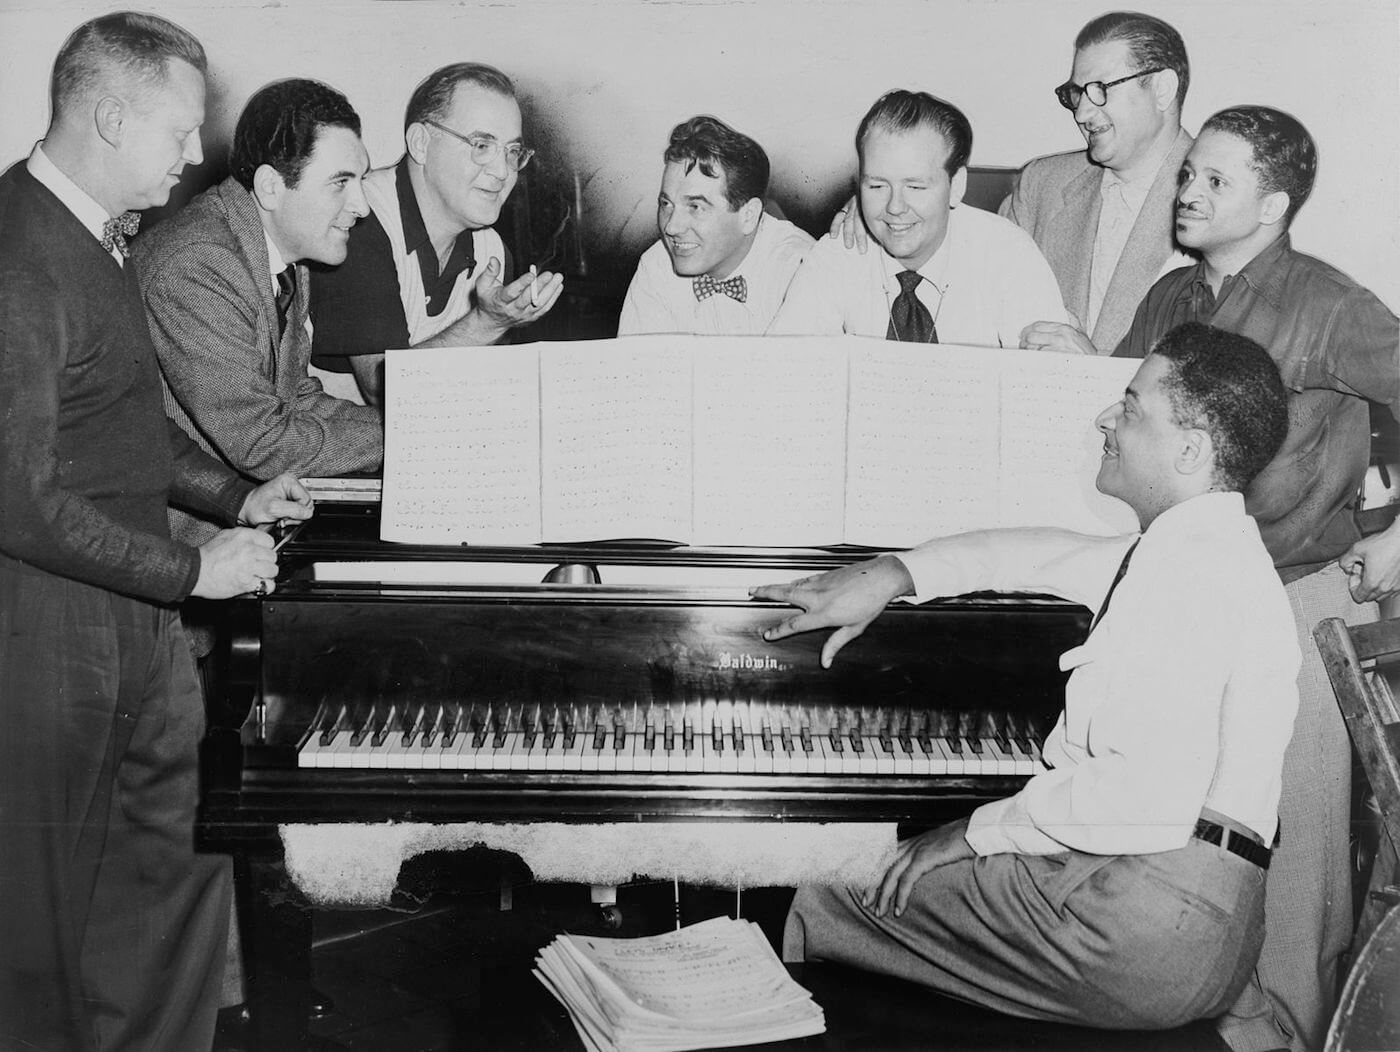 Benny Goodman rehearsing with his big band